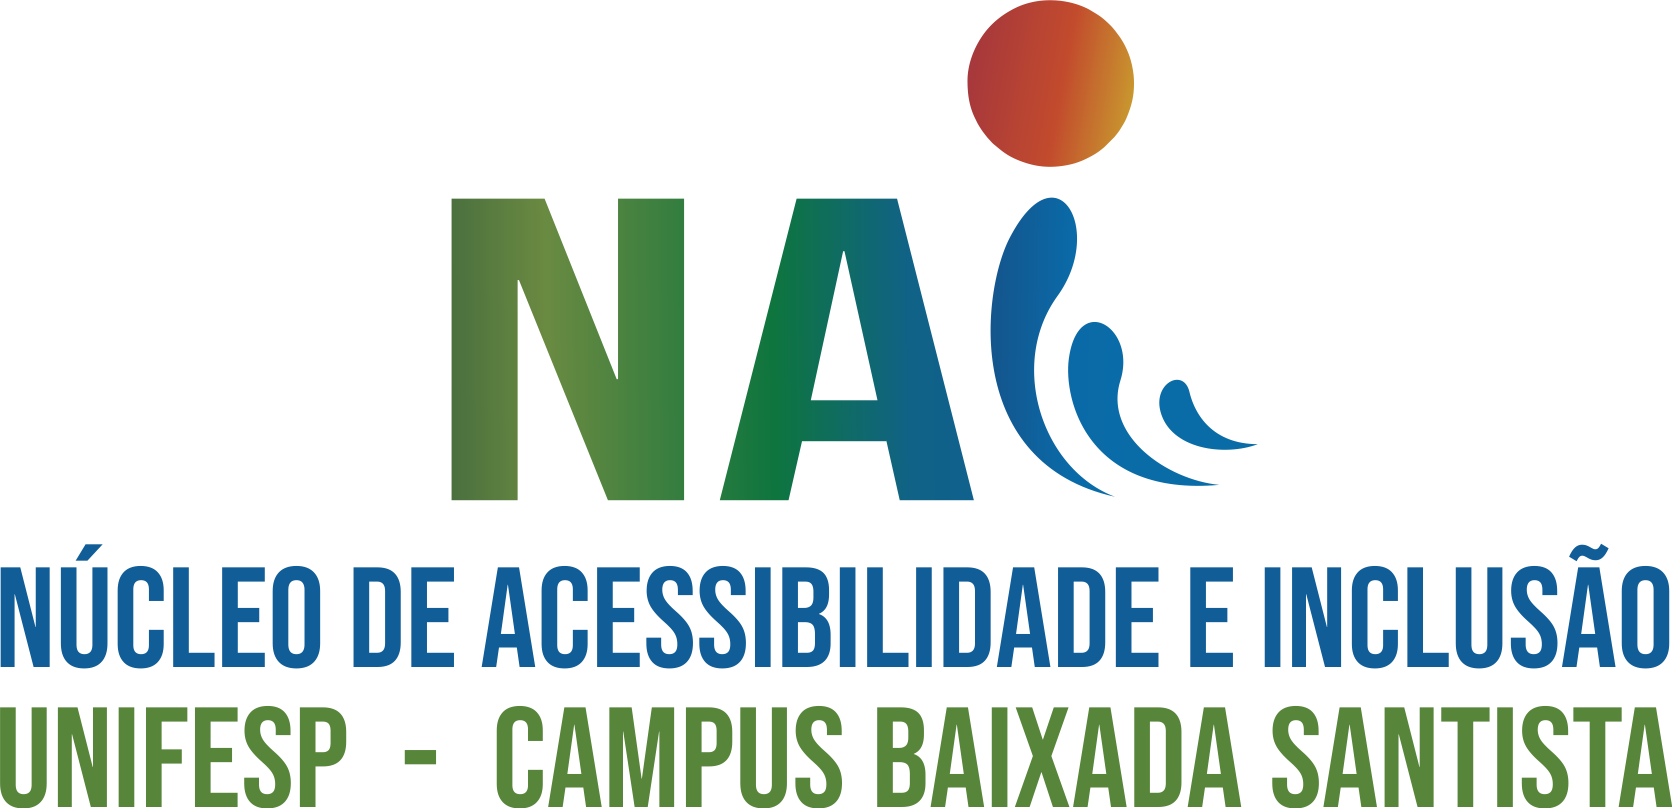 Logomarca criada pelo NAI da Baixada Santista